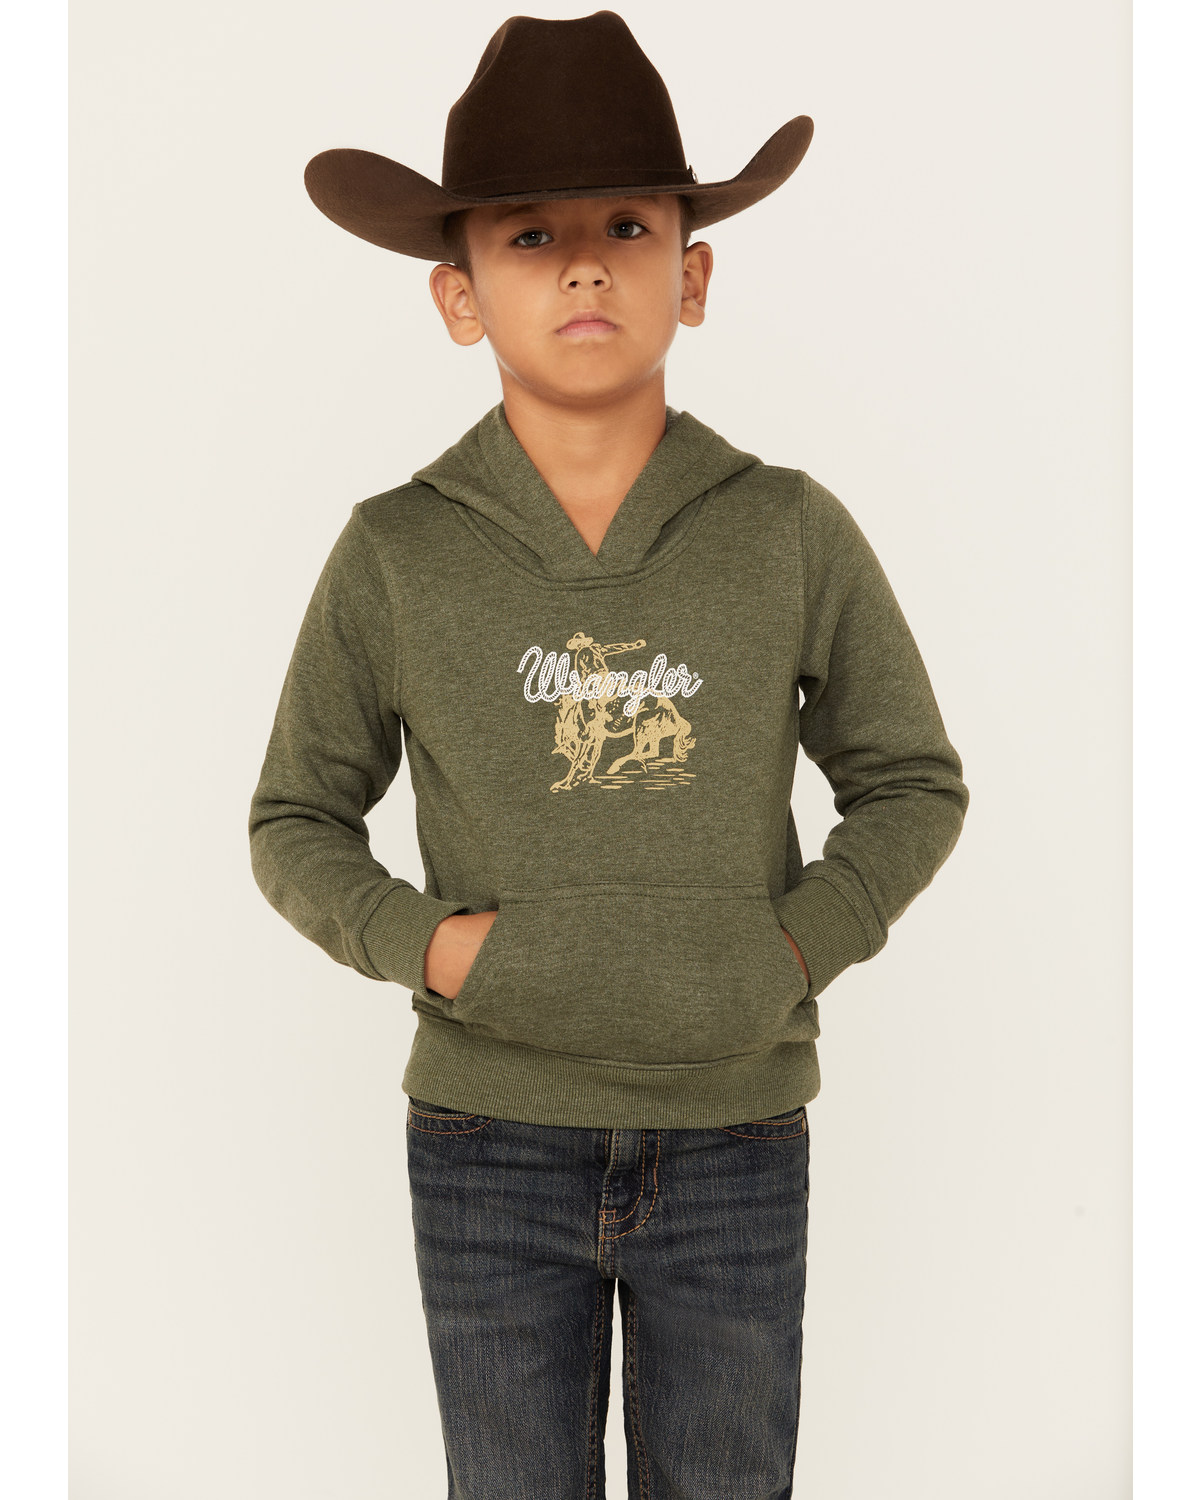 Wrangler Boys' Rodeo Graphic Hooded Sweatshirt